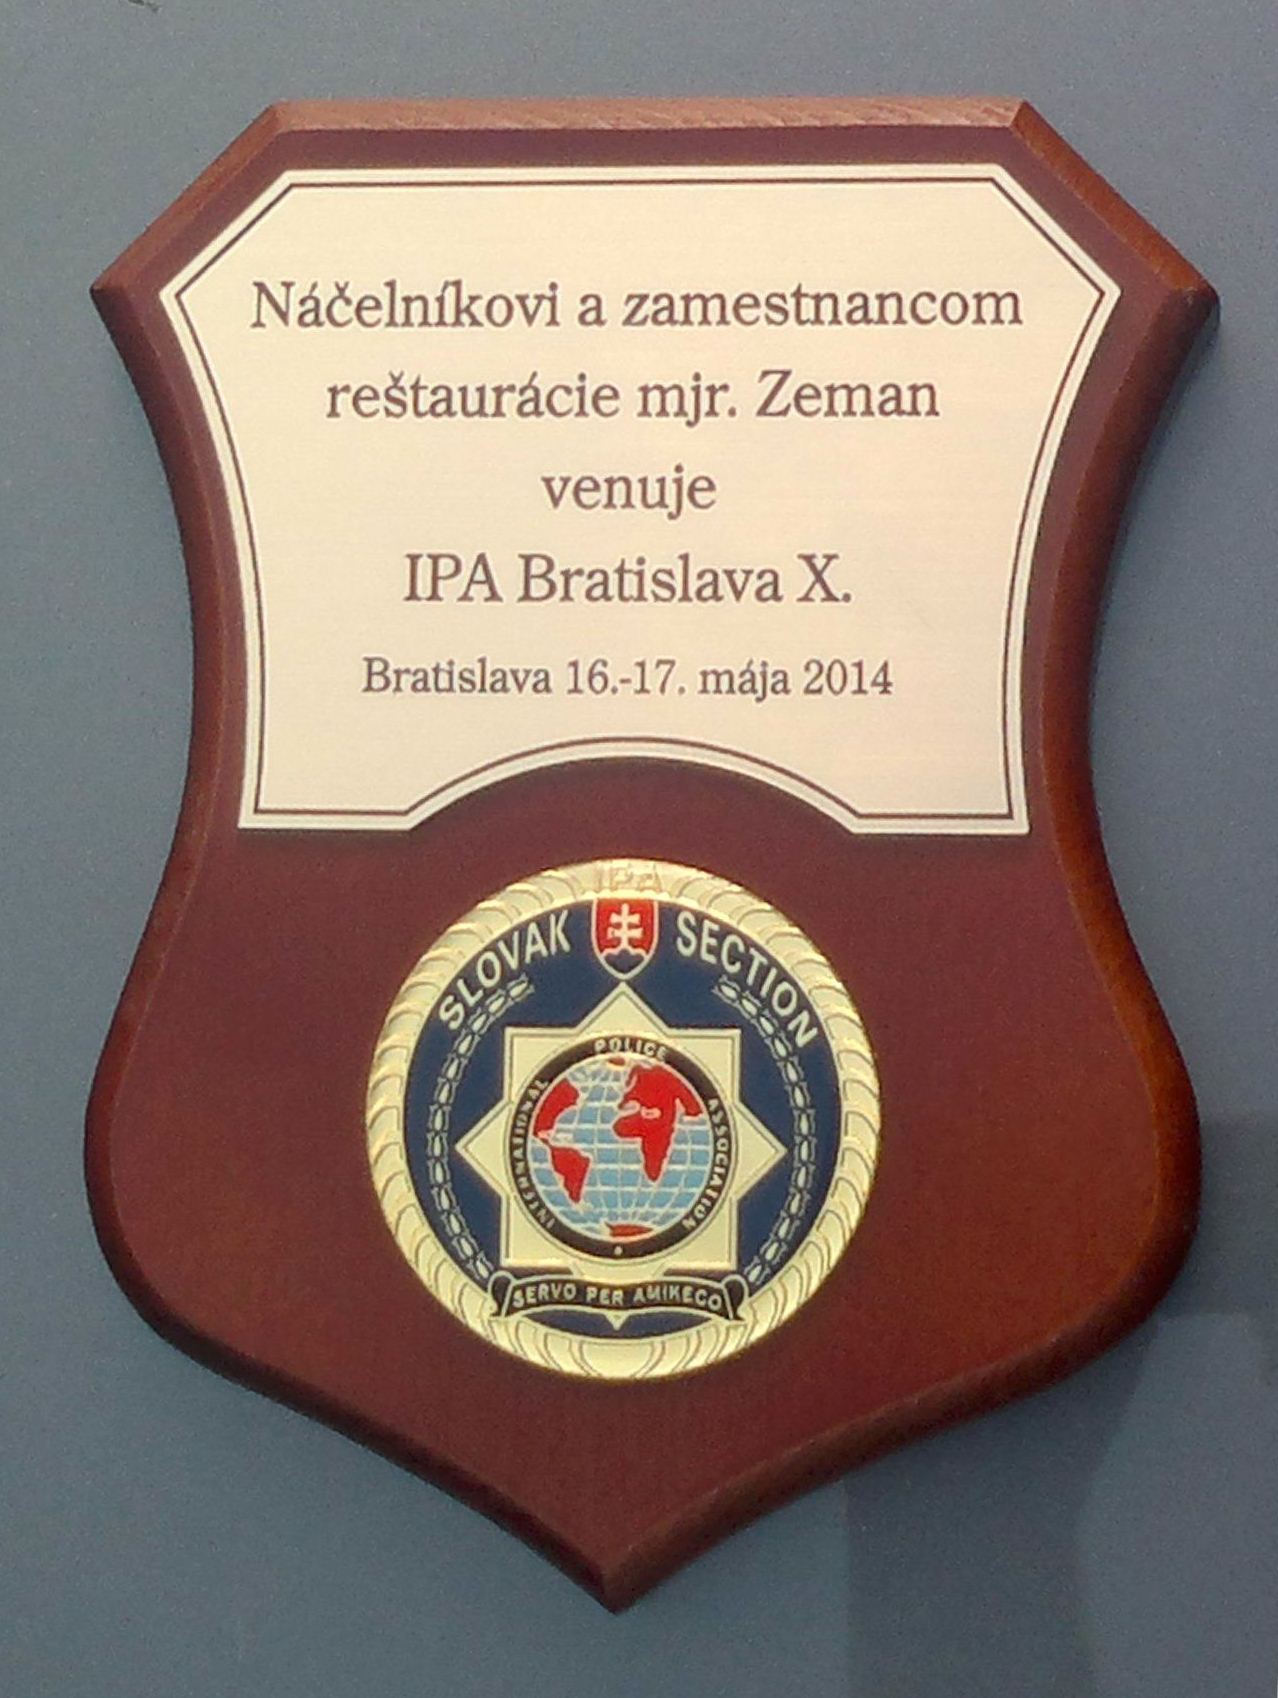 2014 restaurant U Majora Zemana - Slovakia